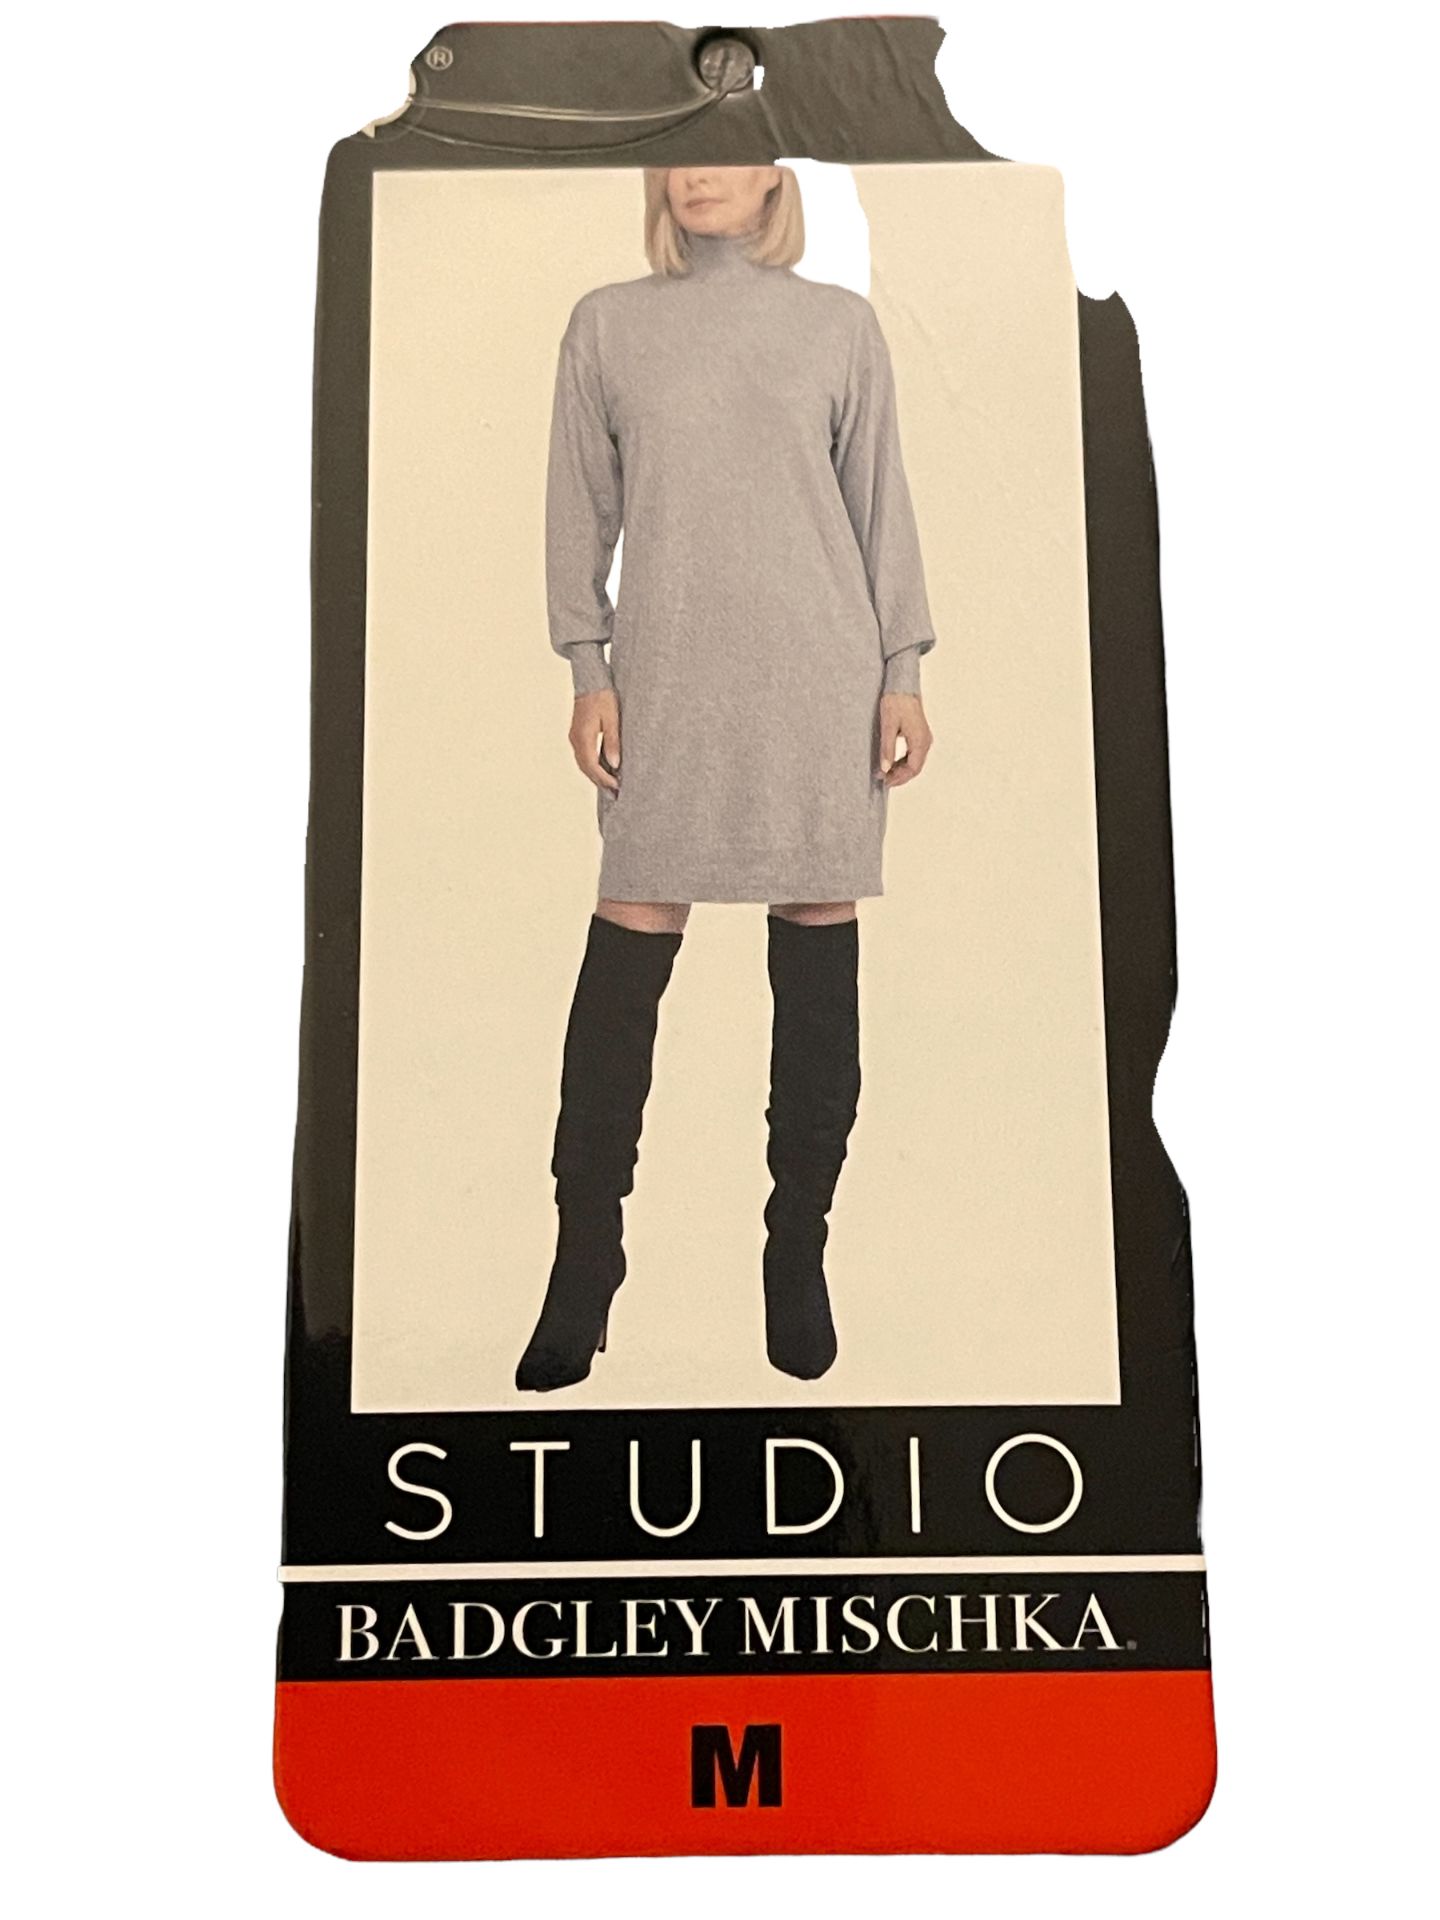 Designer Badgley Mischka Lightweight Fine Knitted Stretchy Jumper Dress UK 12 M RRP £17.99 - Image 3 of 7